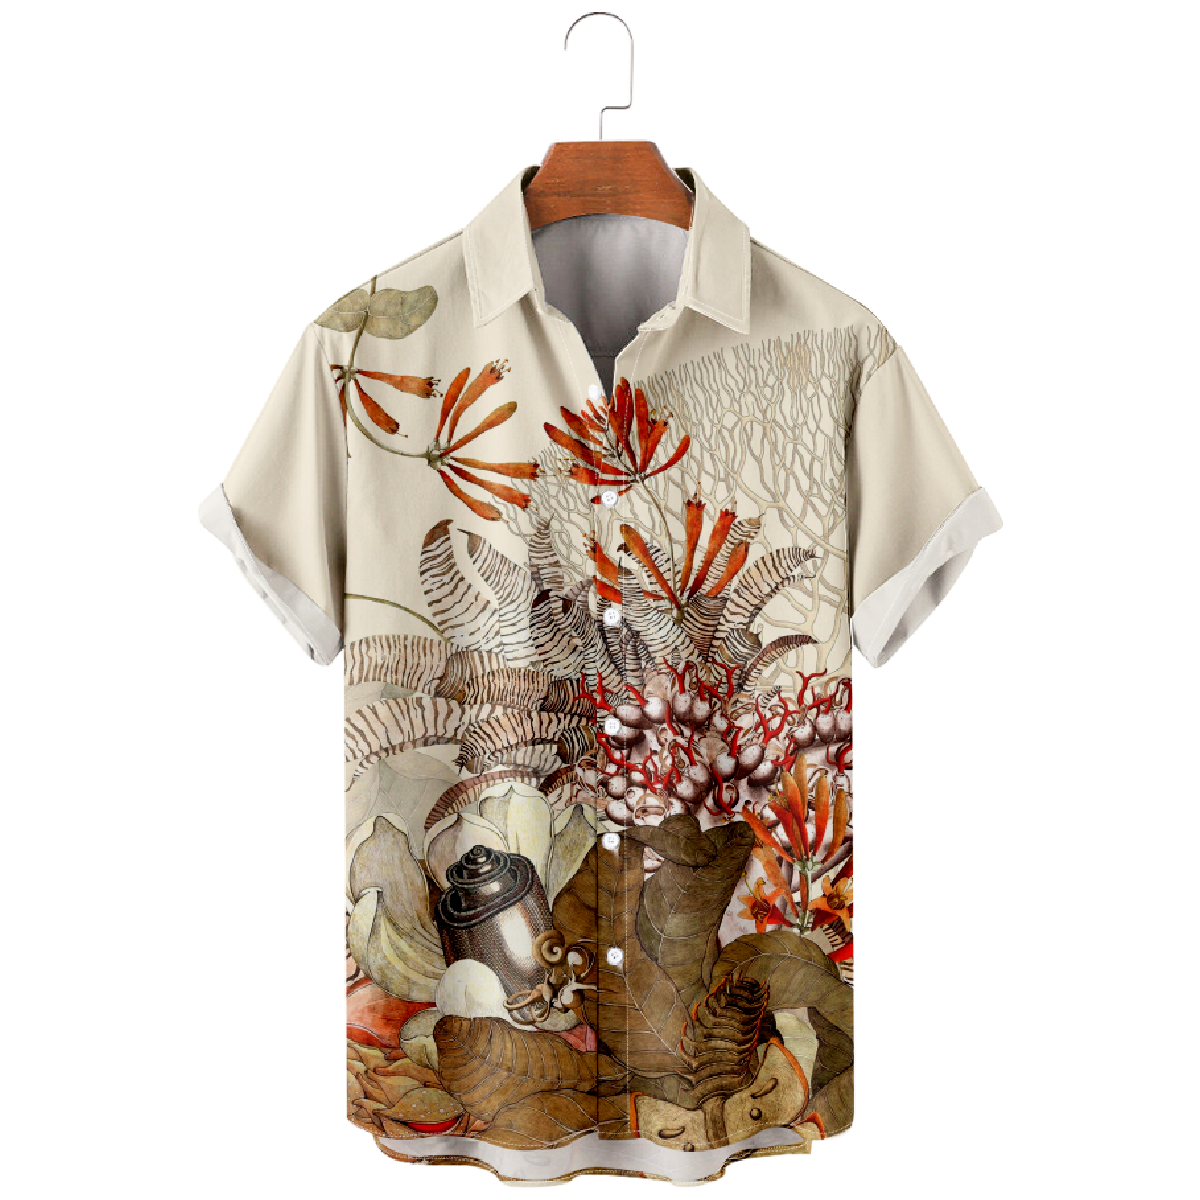 Plant Graphic Print Button Up Shirt Men's Short Sleeve Shirt Casual Shirt 